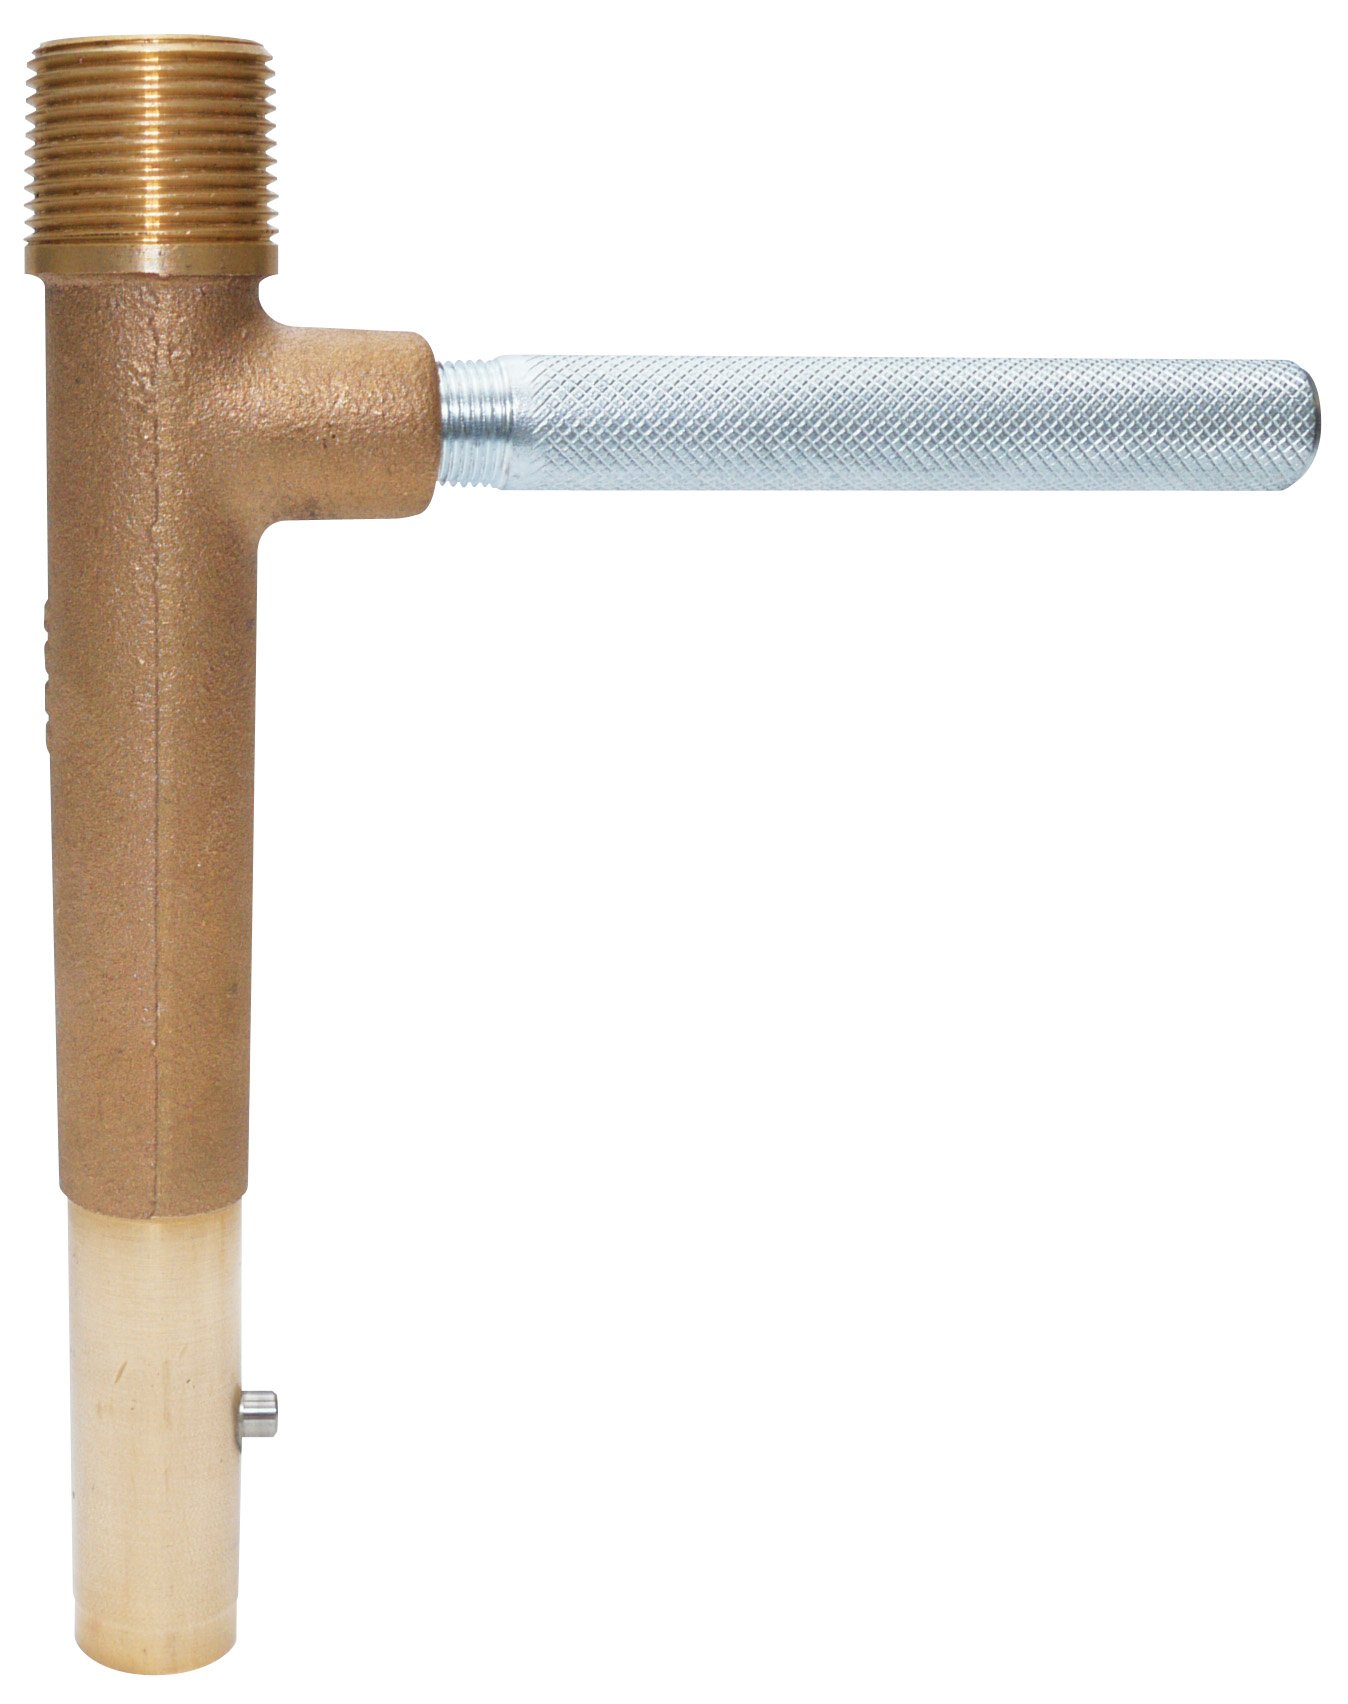 Underhill Quick Coupler Key Tool for Coupler Valve 1-Inch MPT x 34-Inch FPT Outlet Sprinkler Garden Irrigation System Sol